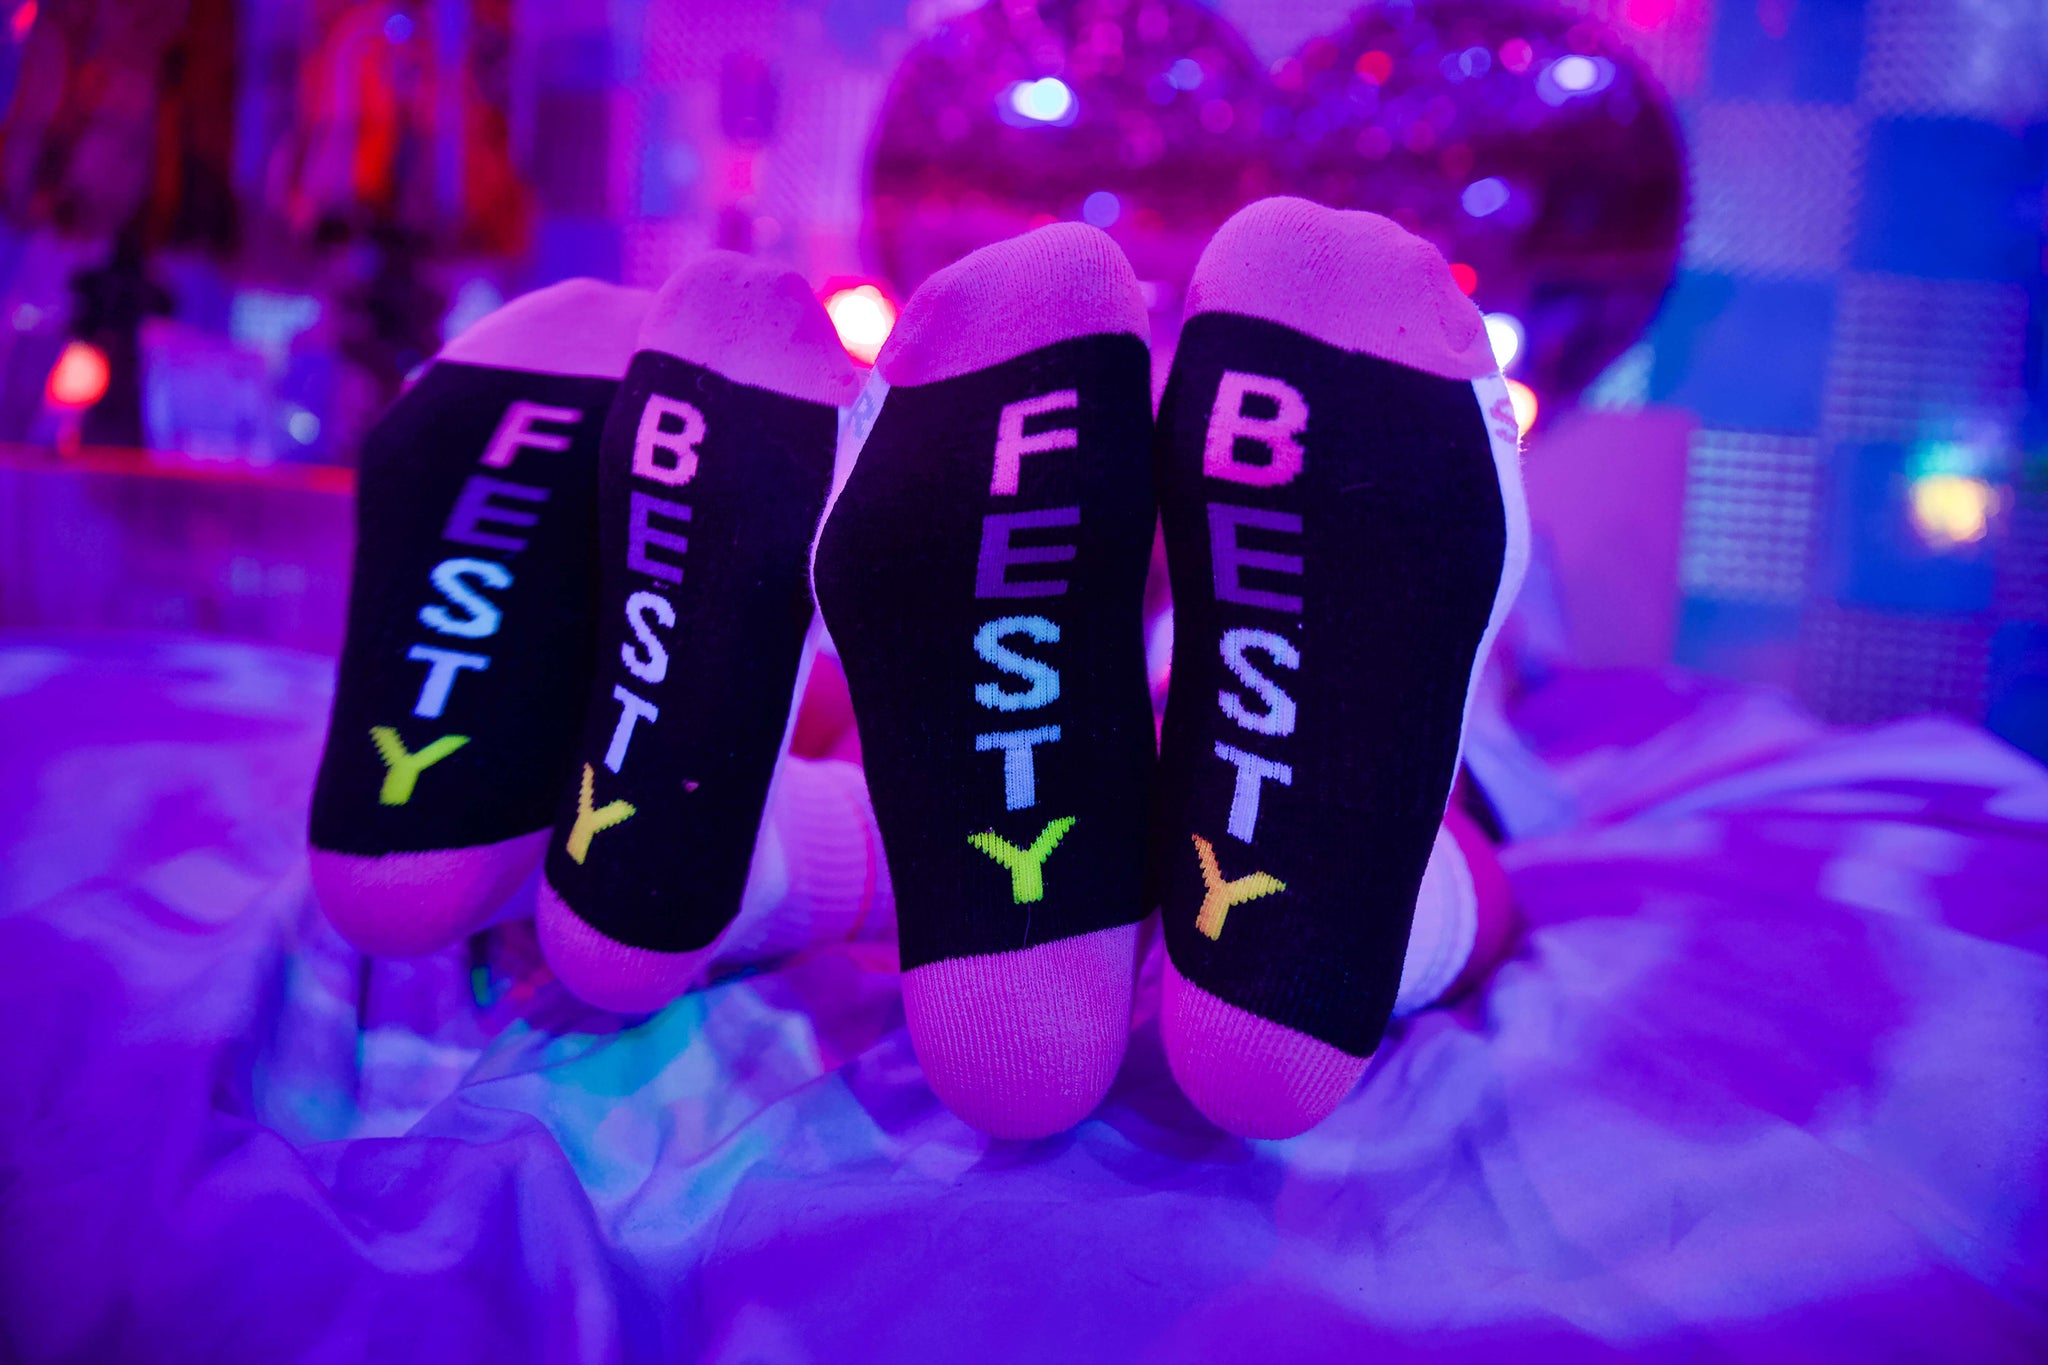 Festy Besty Super-Air Socks (Vanessa Seco, Pamela Seco, & Marina Fini Photoshoot)